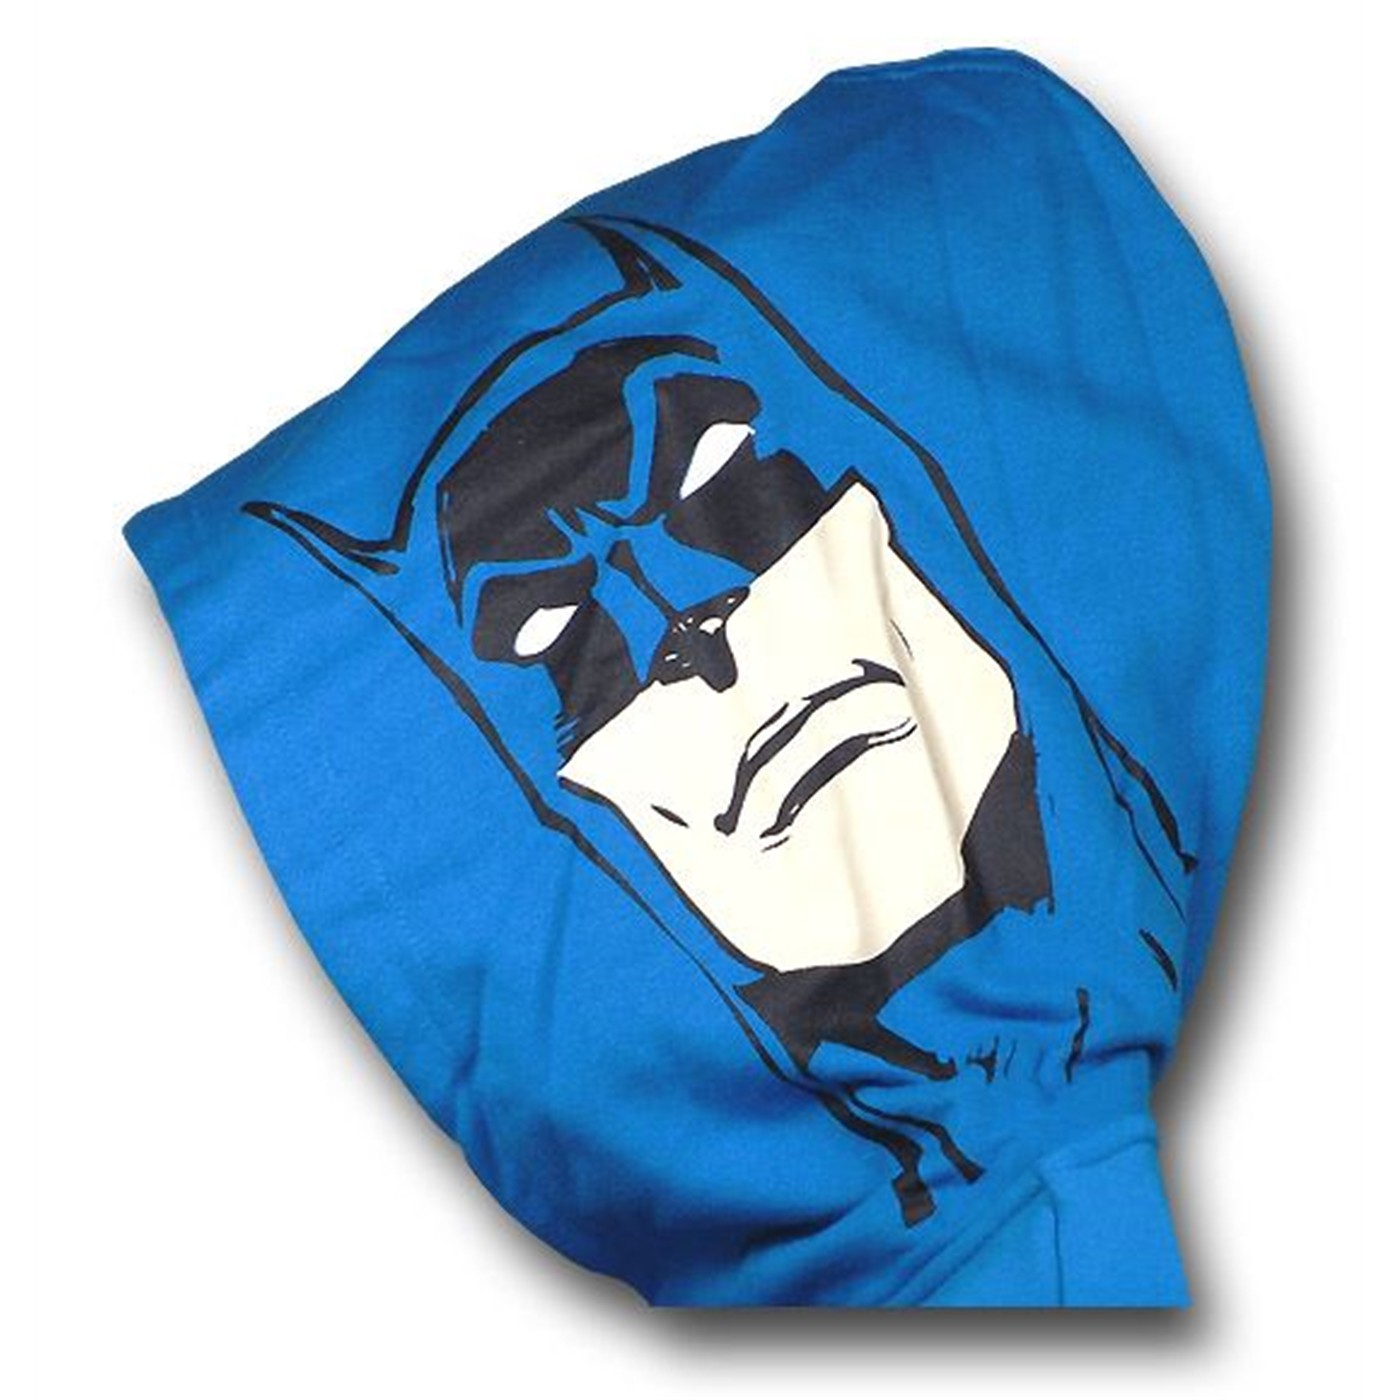 Batman Costume Sideward Glance Zip-Up Hoodie